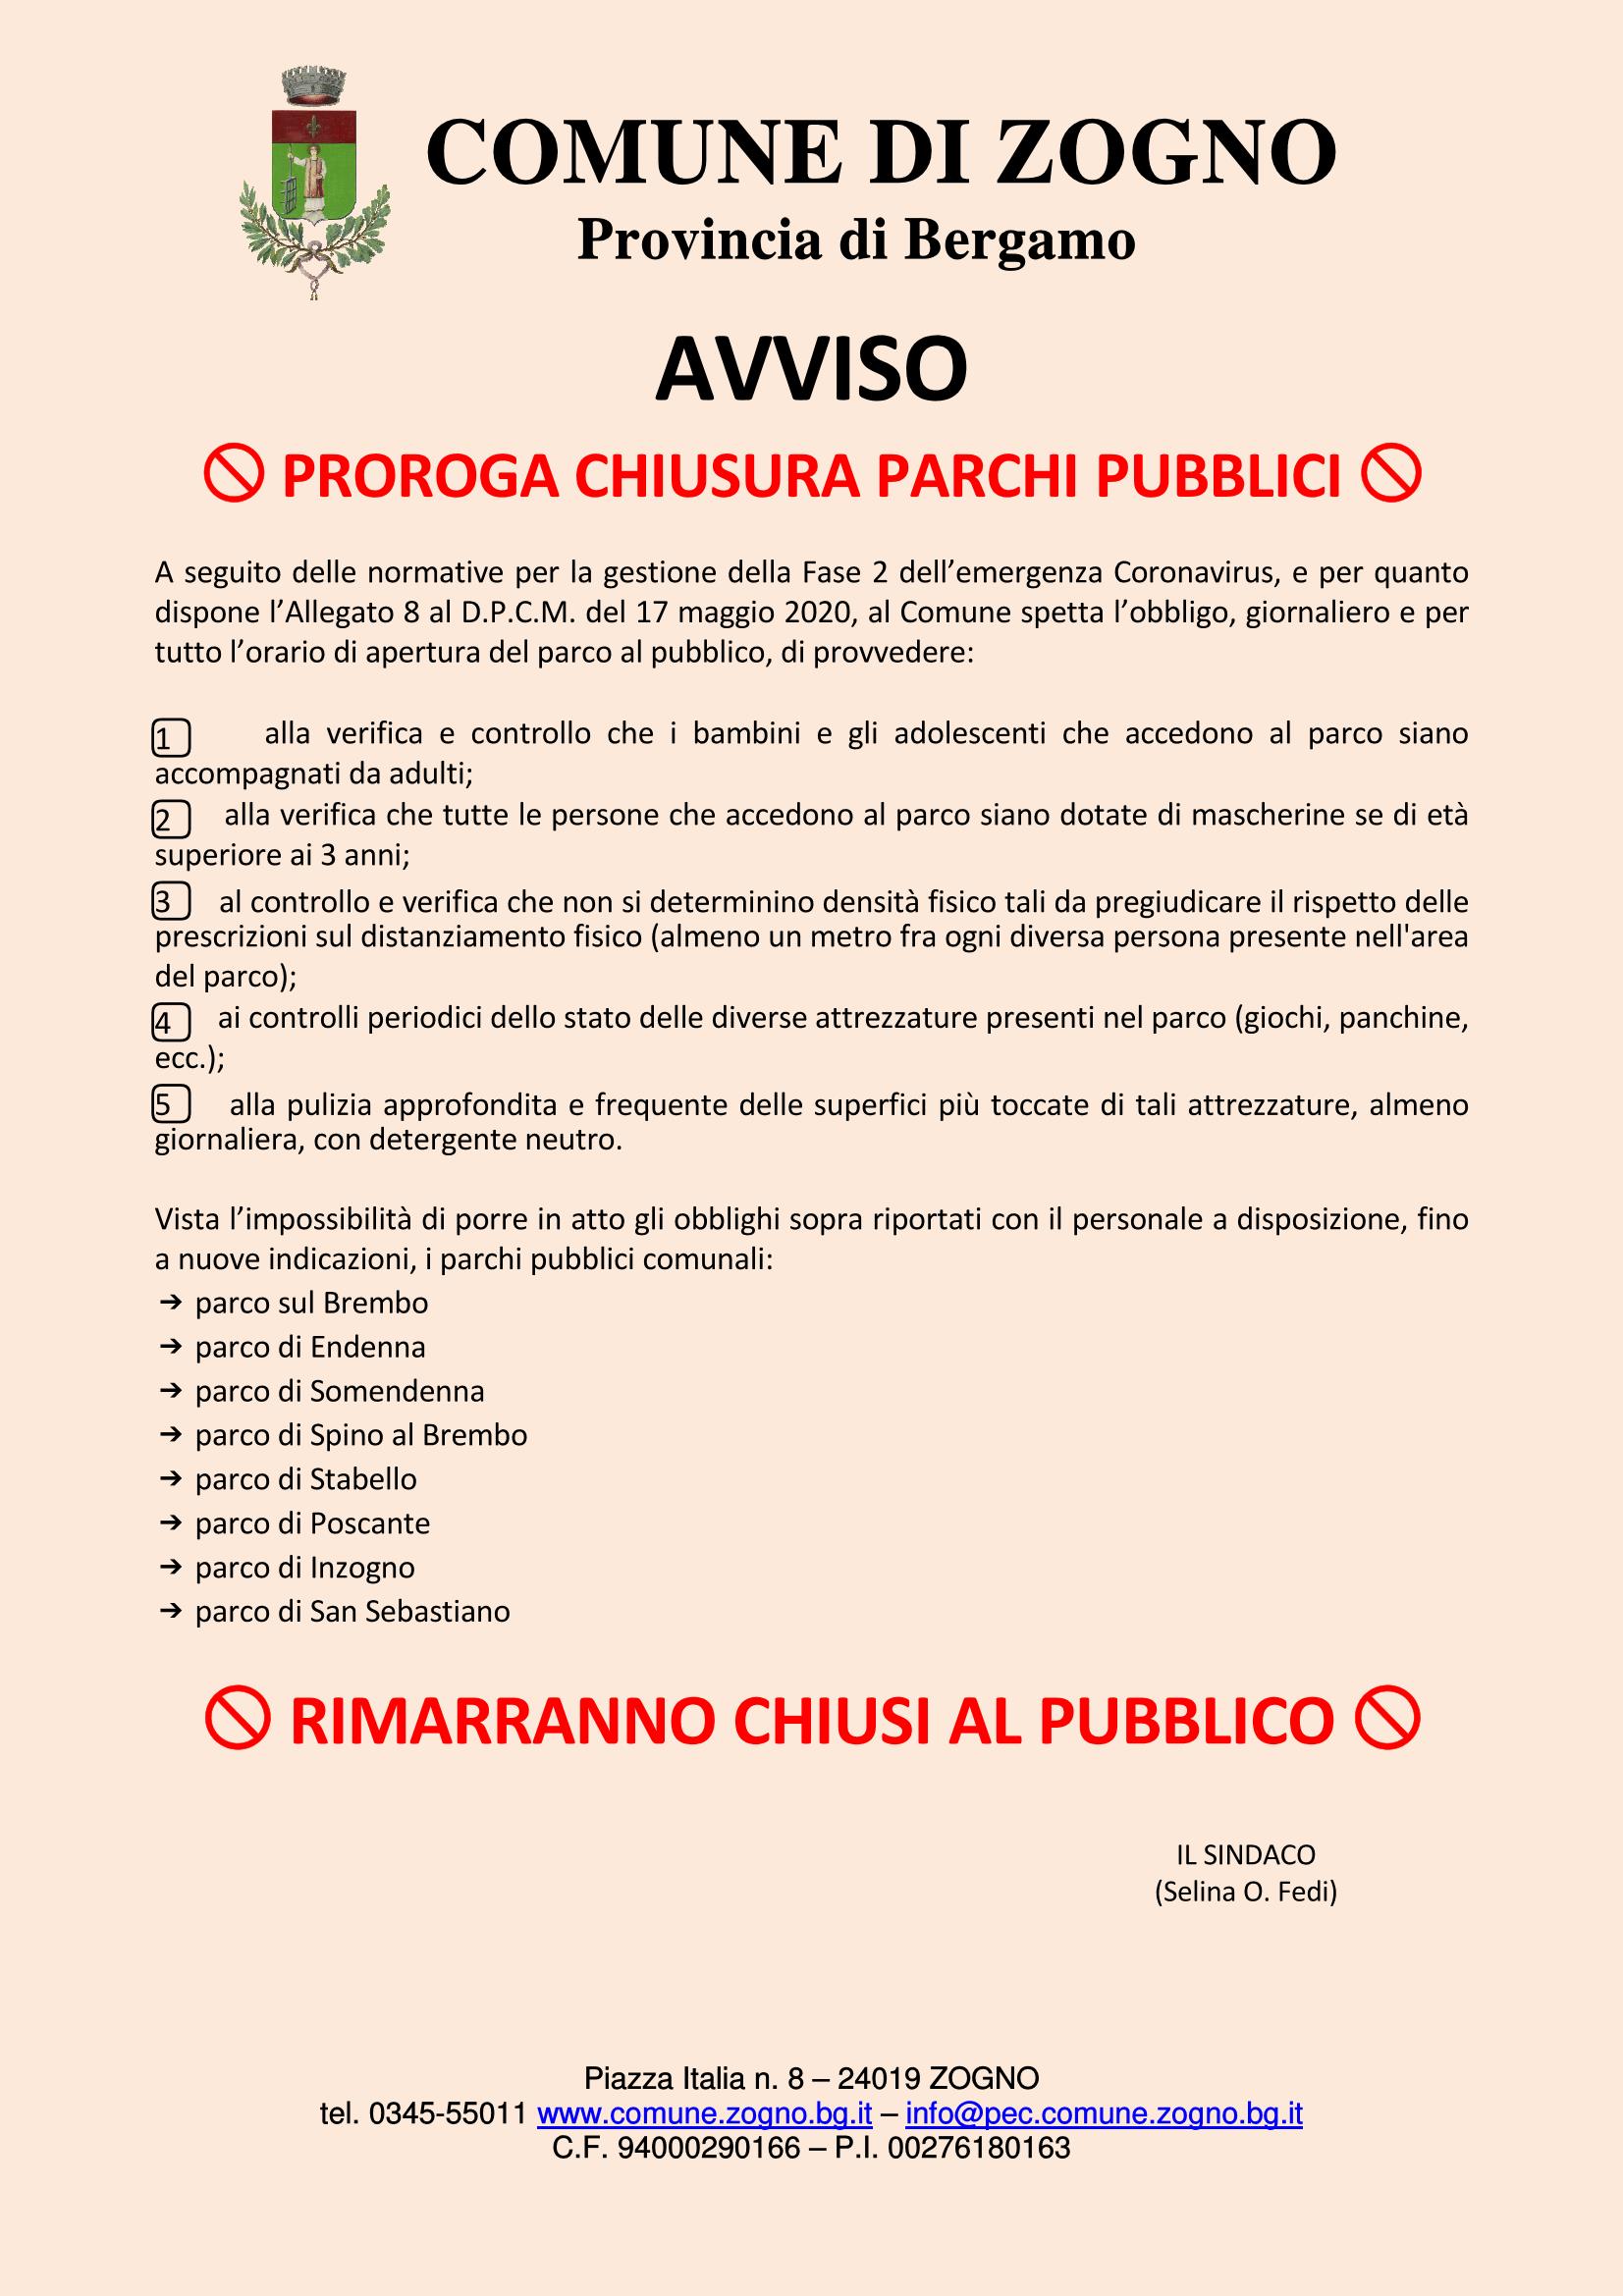 AVVISO CHIUSURA PARCHI 22052020_Page_1